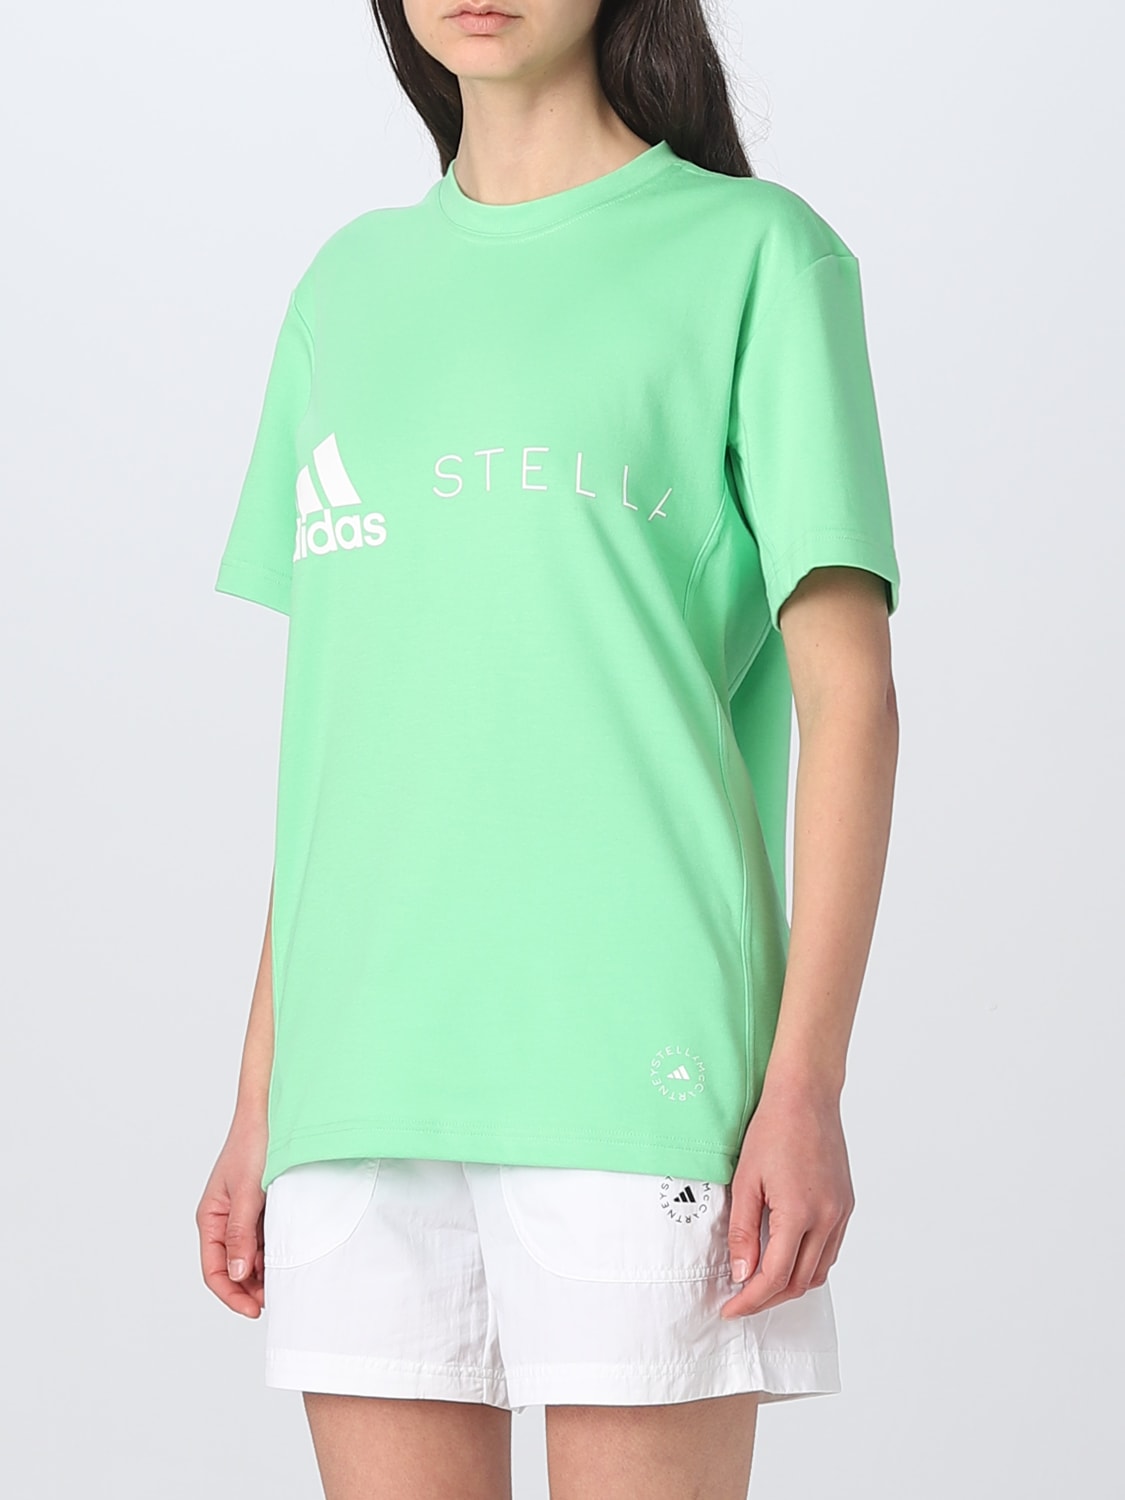 Electrificeren Ontwikkelen Demon ADIDAS BY STELLA MCCARTNEY: t-shirt for woman - Green | Adidas By Stella  Mccartney t-shirt IB2300 online on GIGLIO.COM